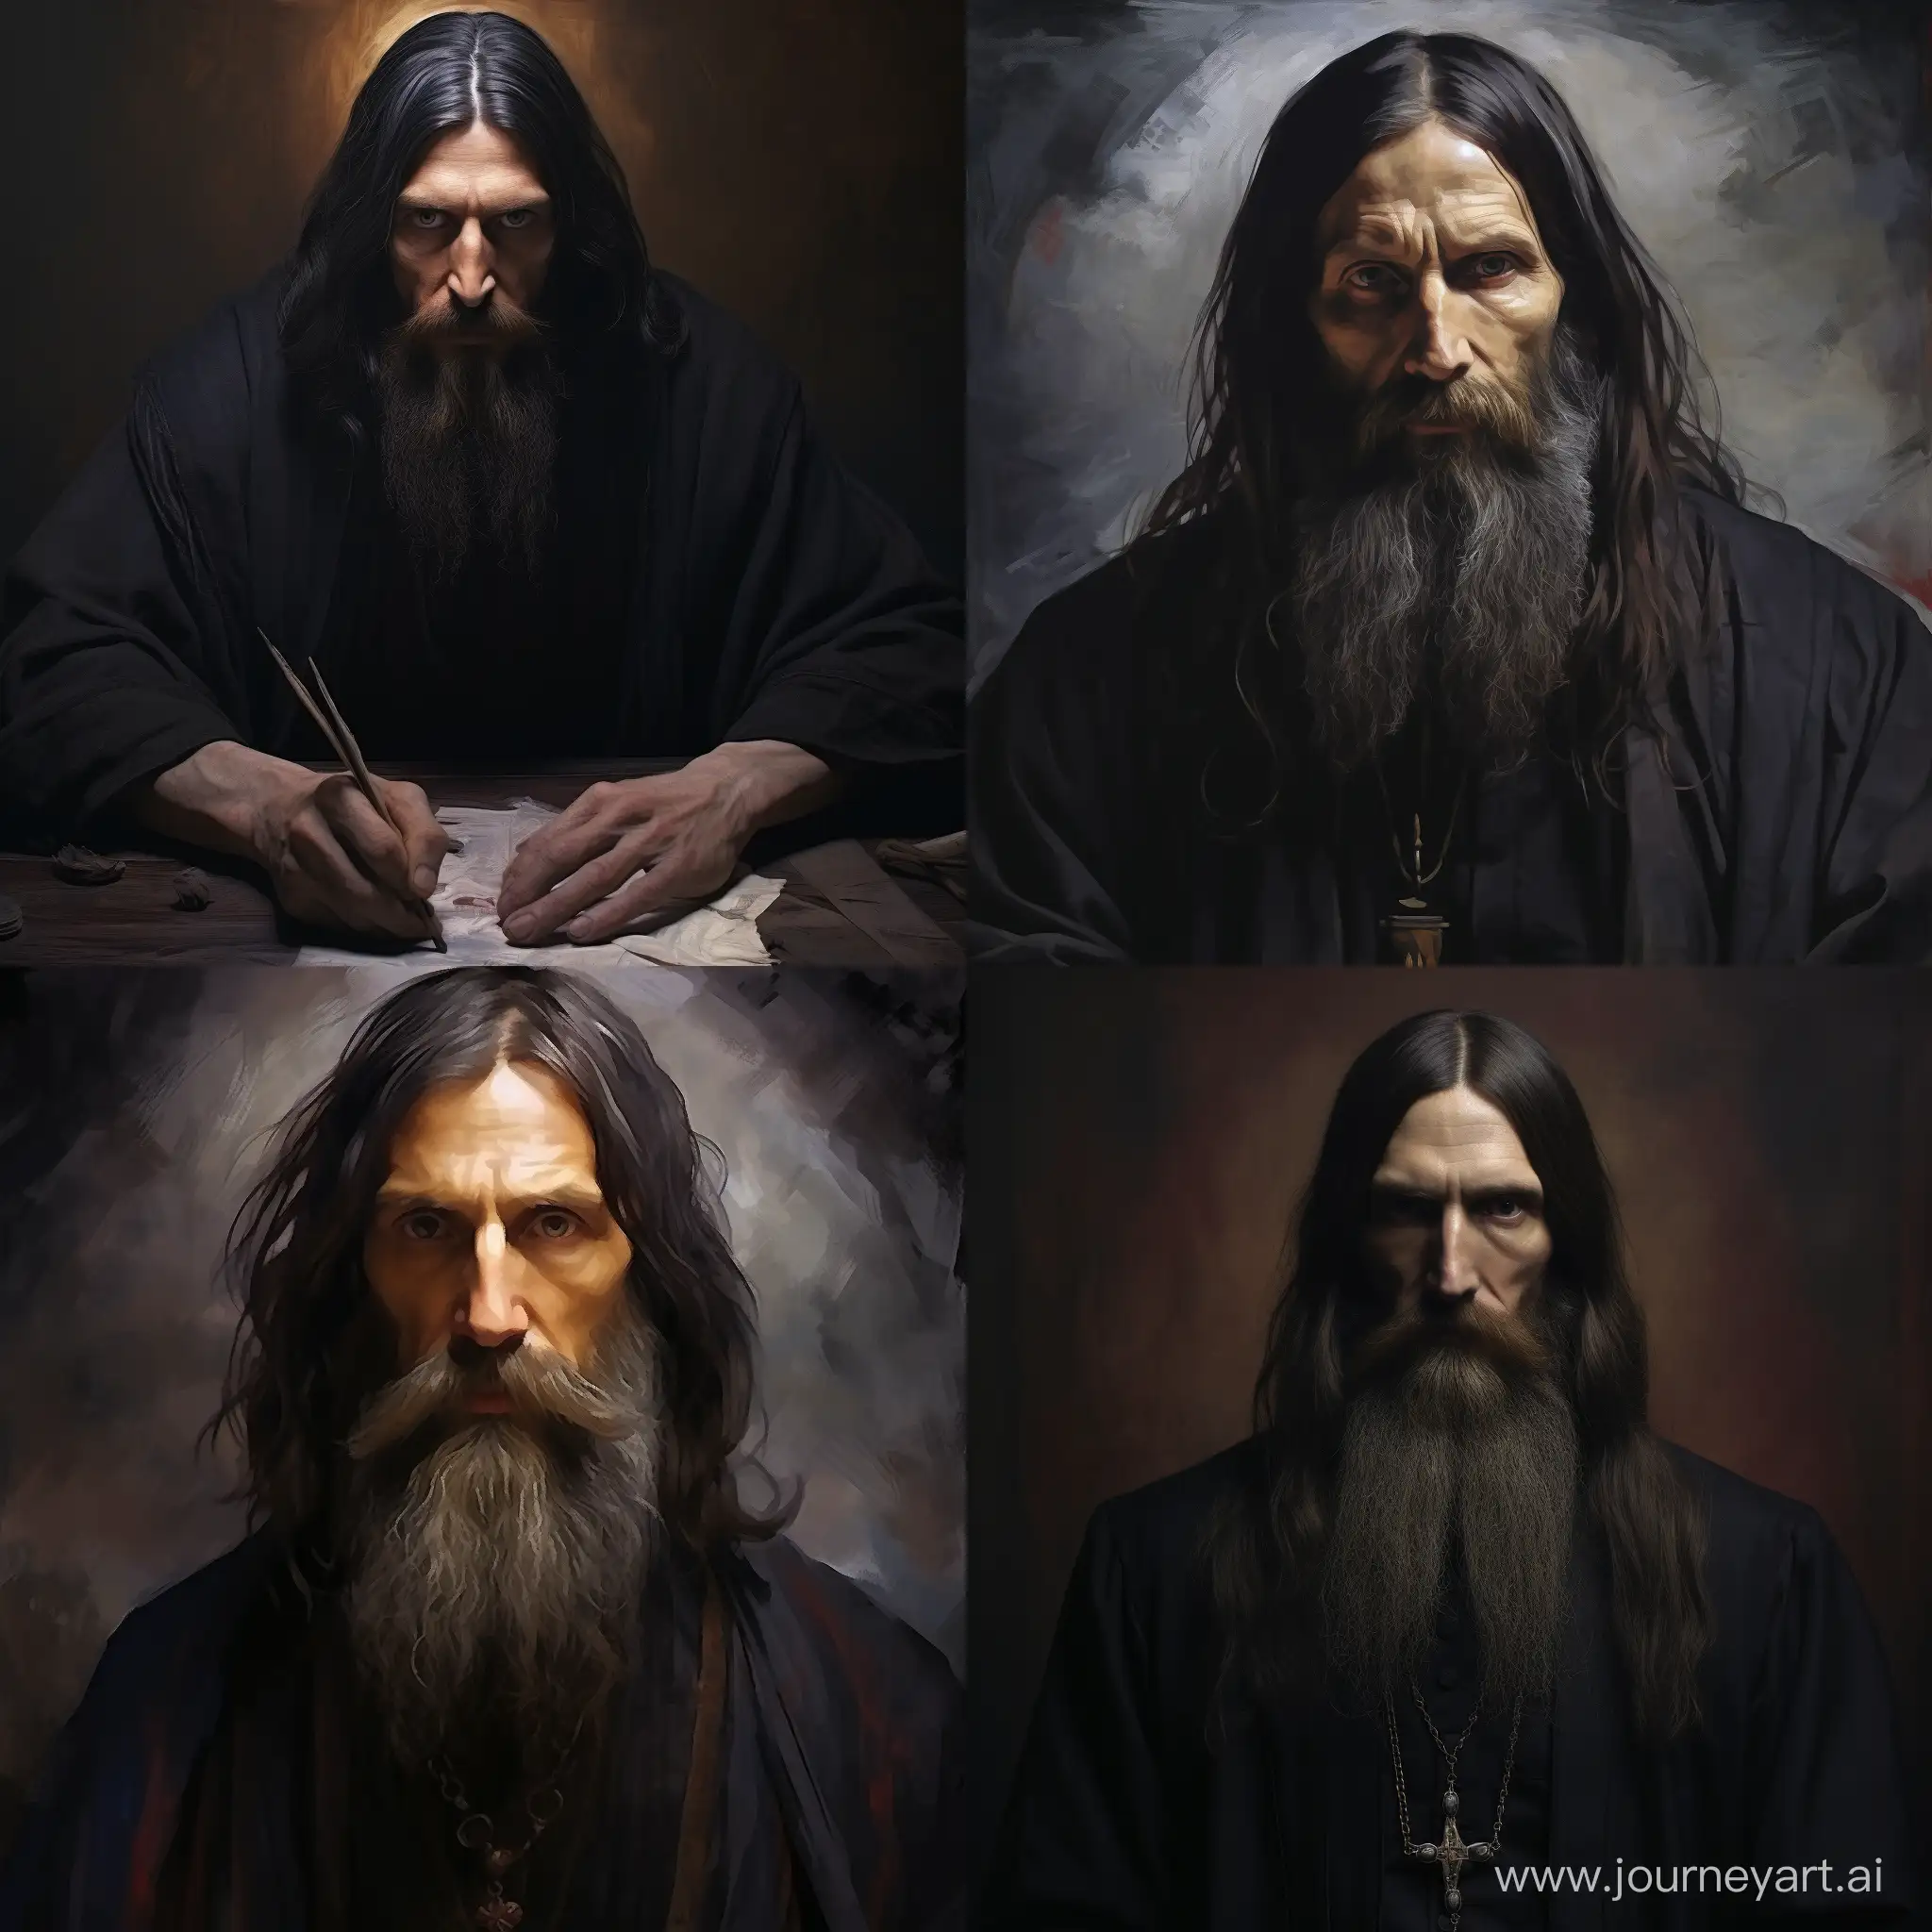 Draw Rasputin in oil painting style